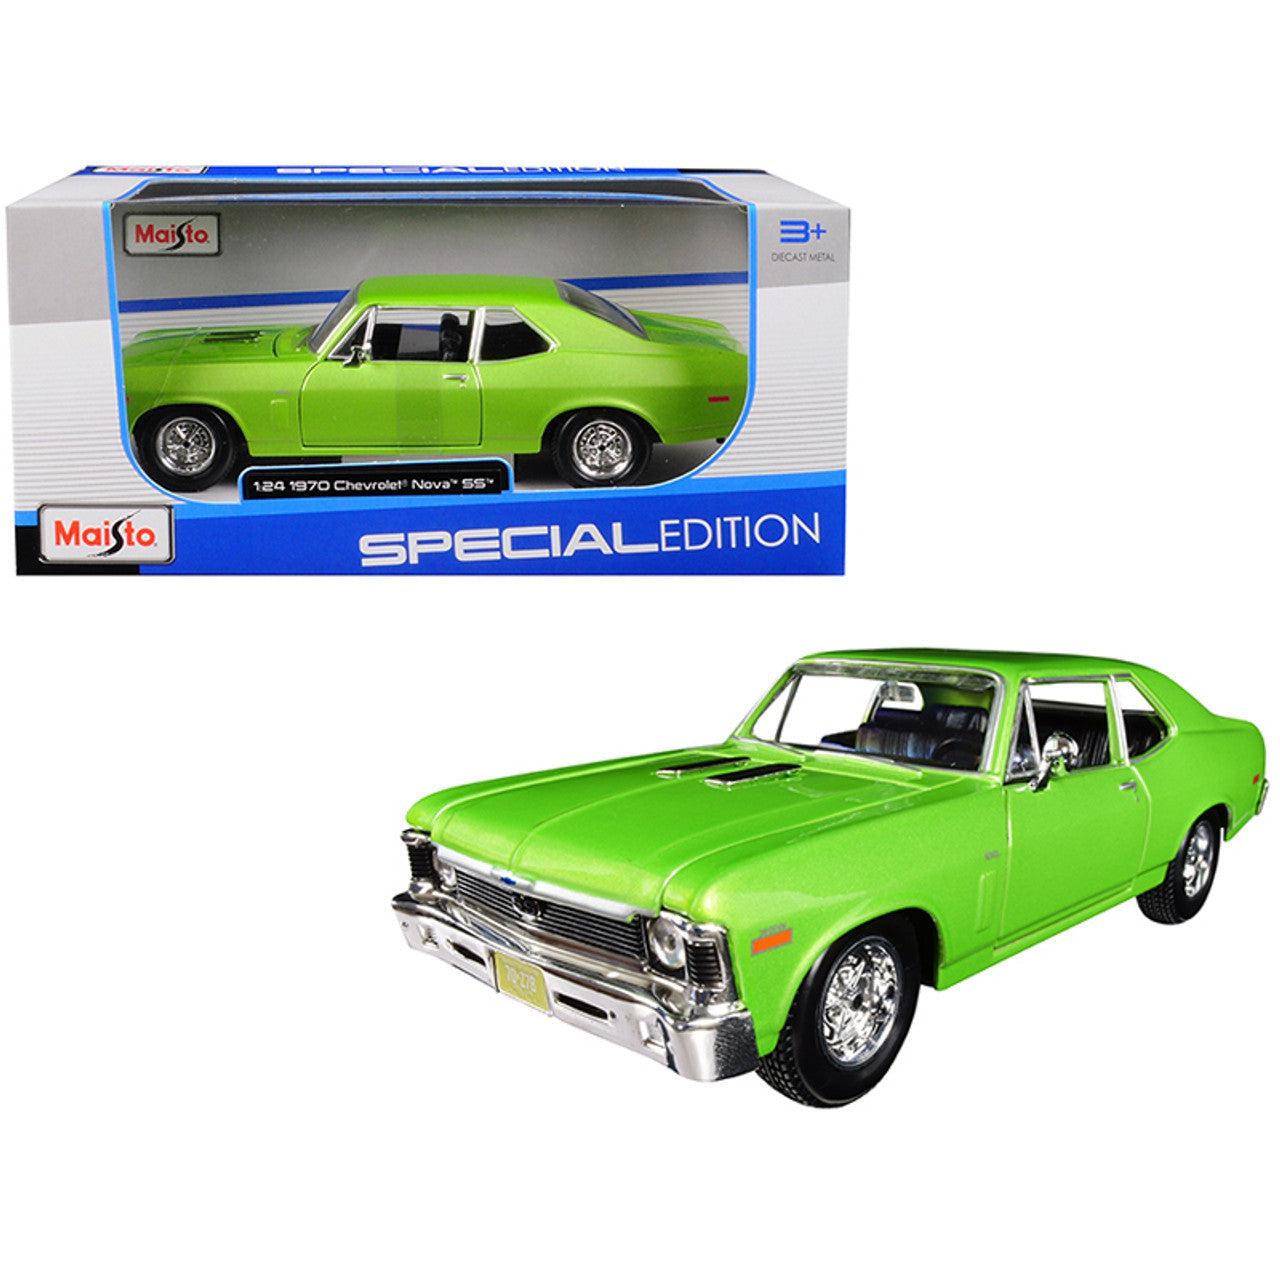 Maisto-1:24 Special Edition 1970 Chevrolet Nova SS-31262-Legacy Toys